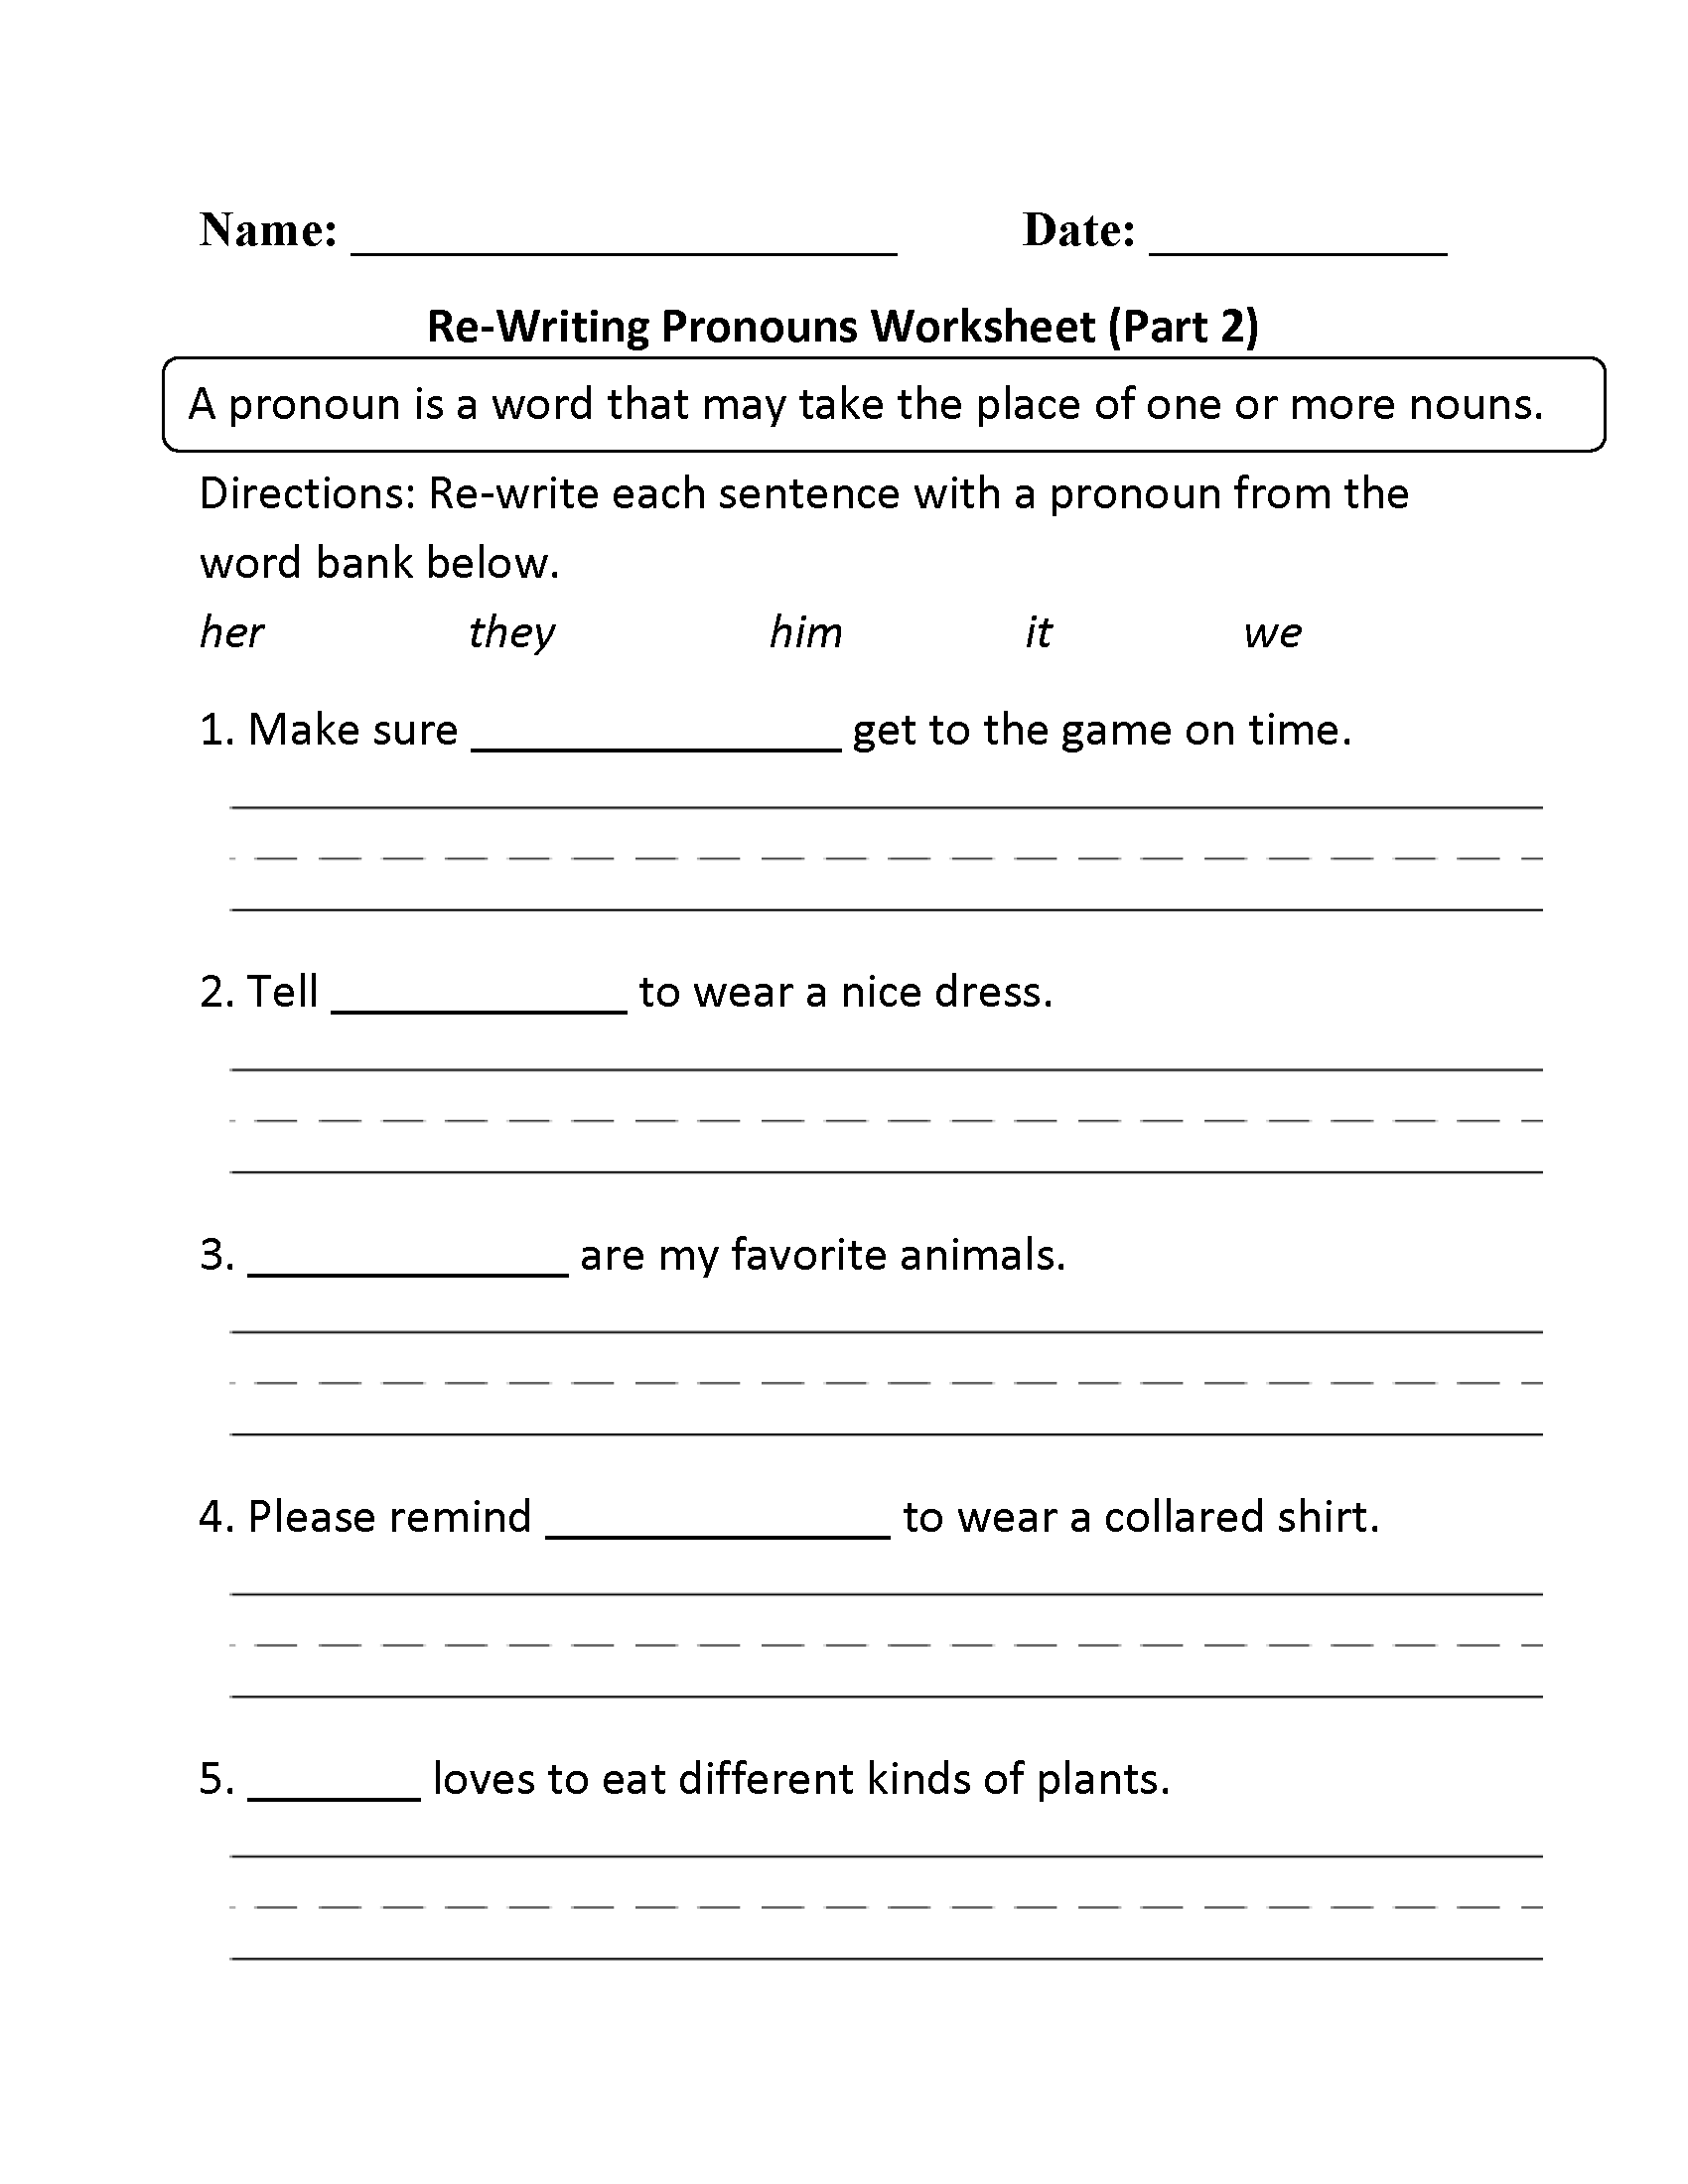 Re-Writing Pronouns Worksheet Part 2